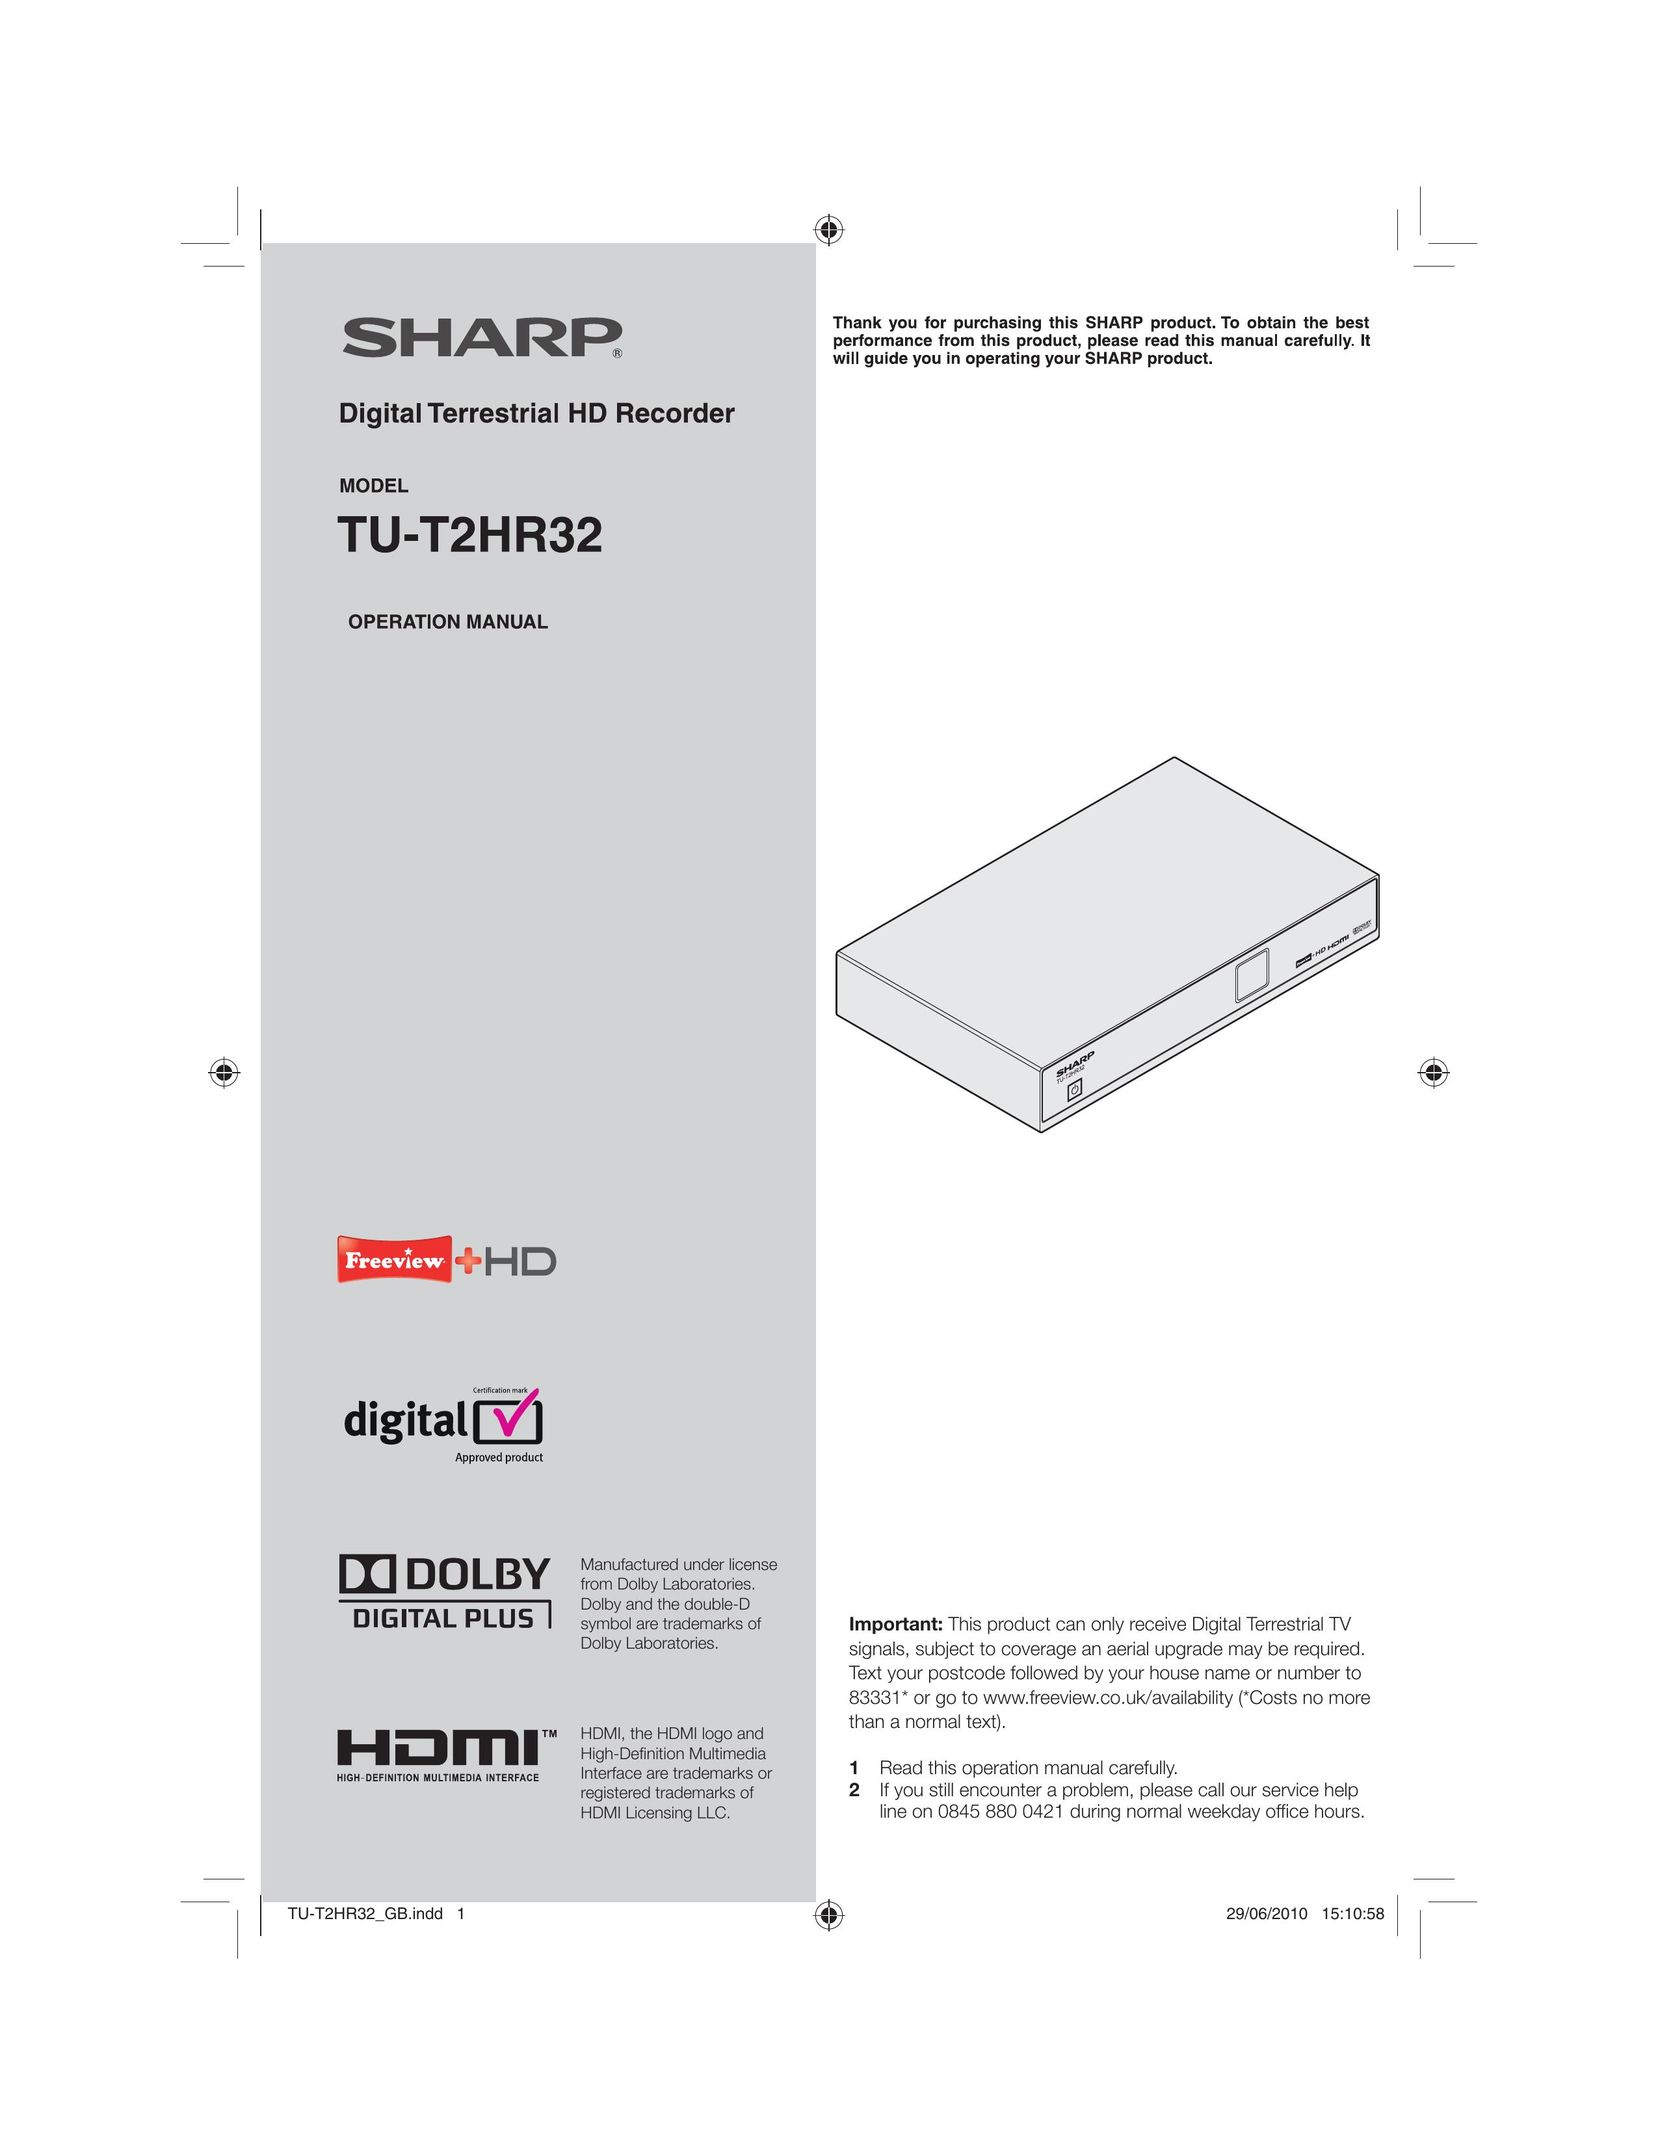 Sharp TU-T2HR32 DVR User Manual